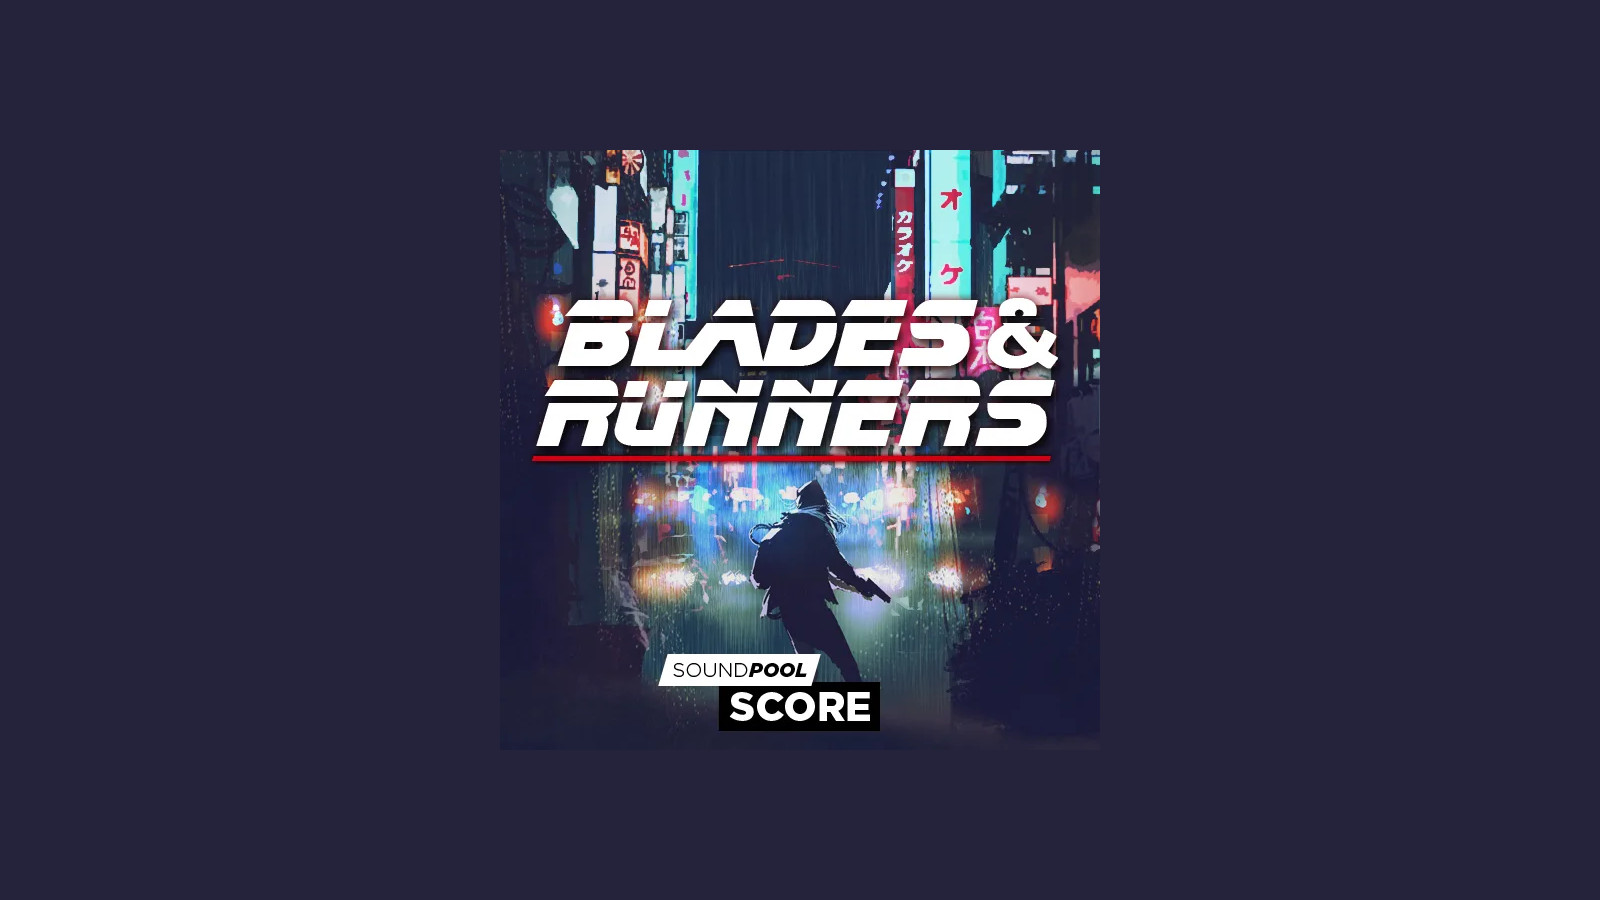 MAGIX Soundpool Blades & Runners ProducerPlanet CD Key [$ 5.65]